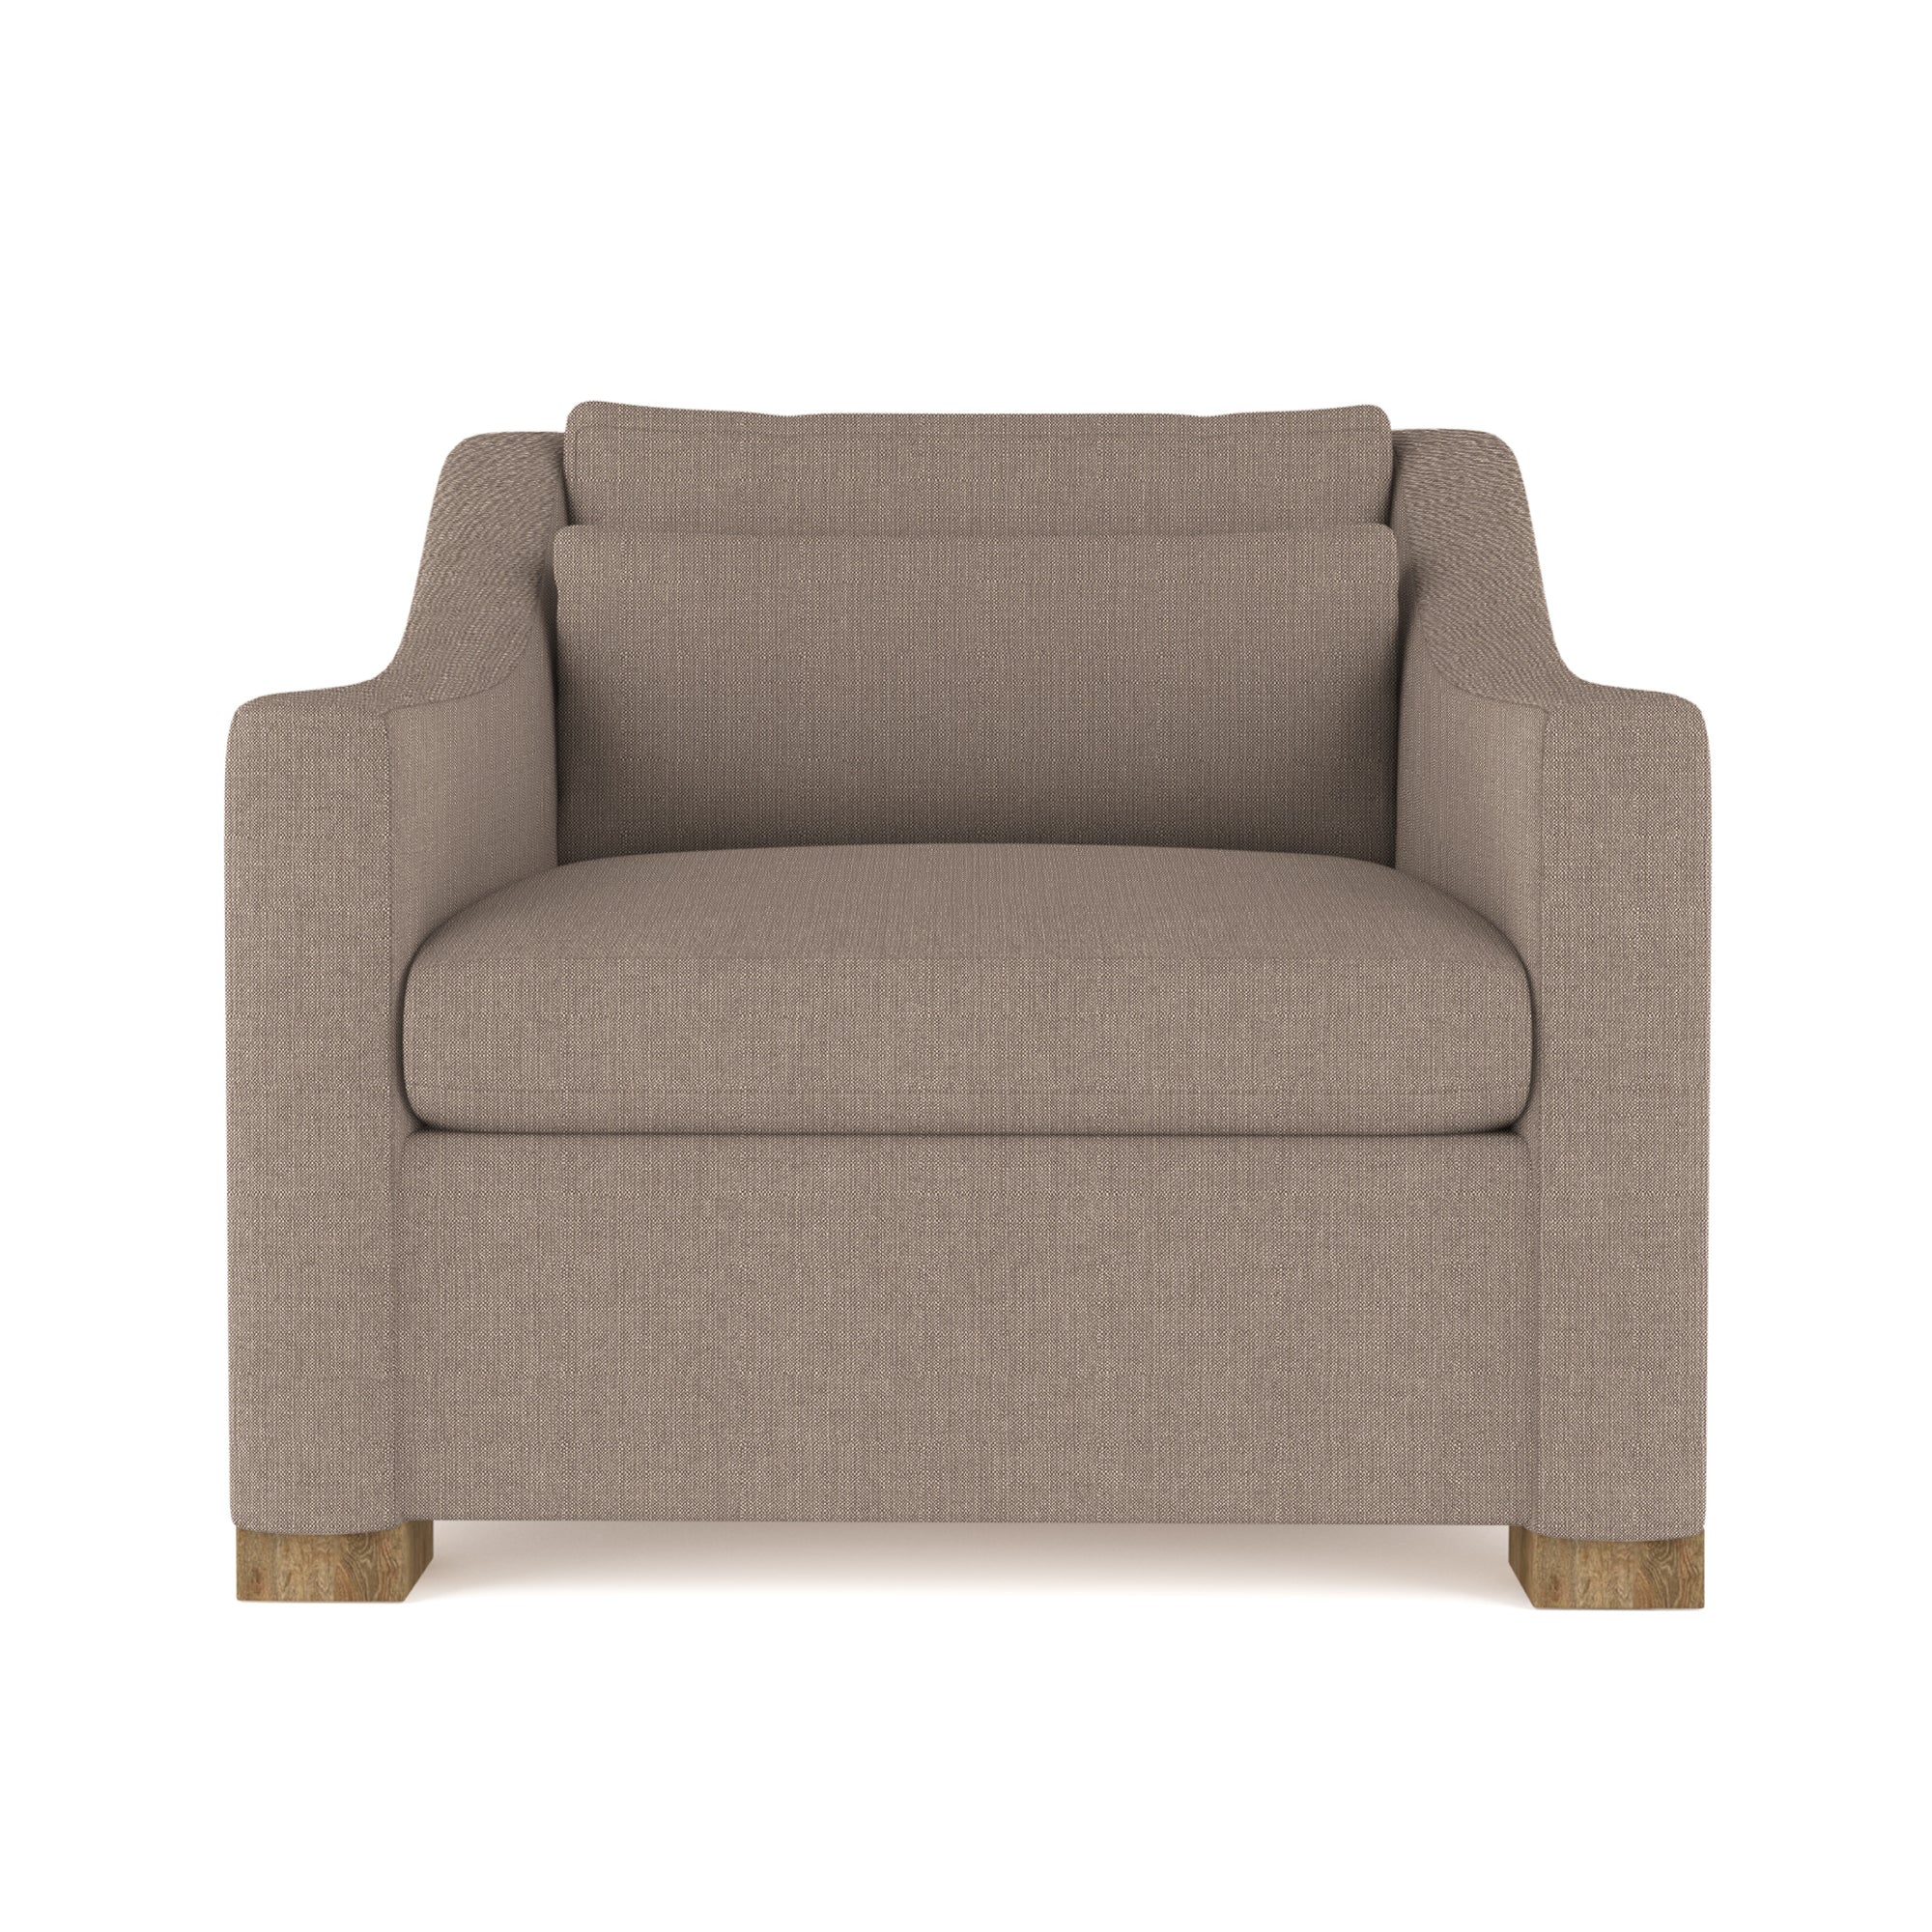 Crosby Chair - Pumice Box Weave Linen